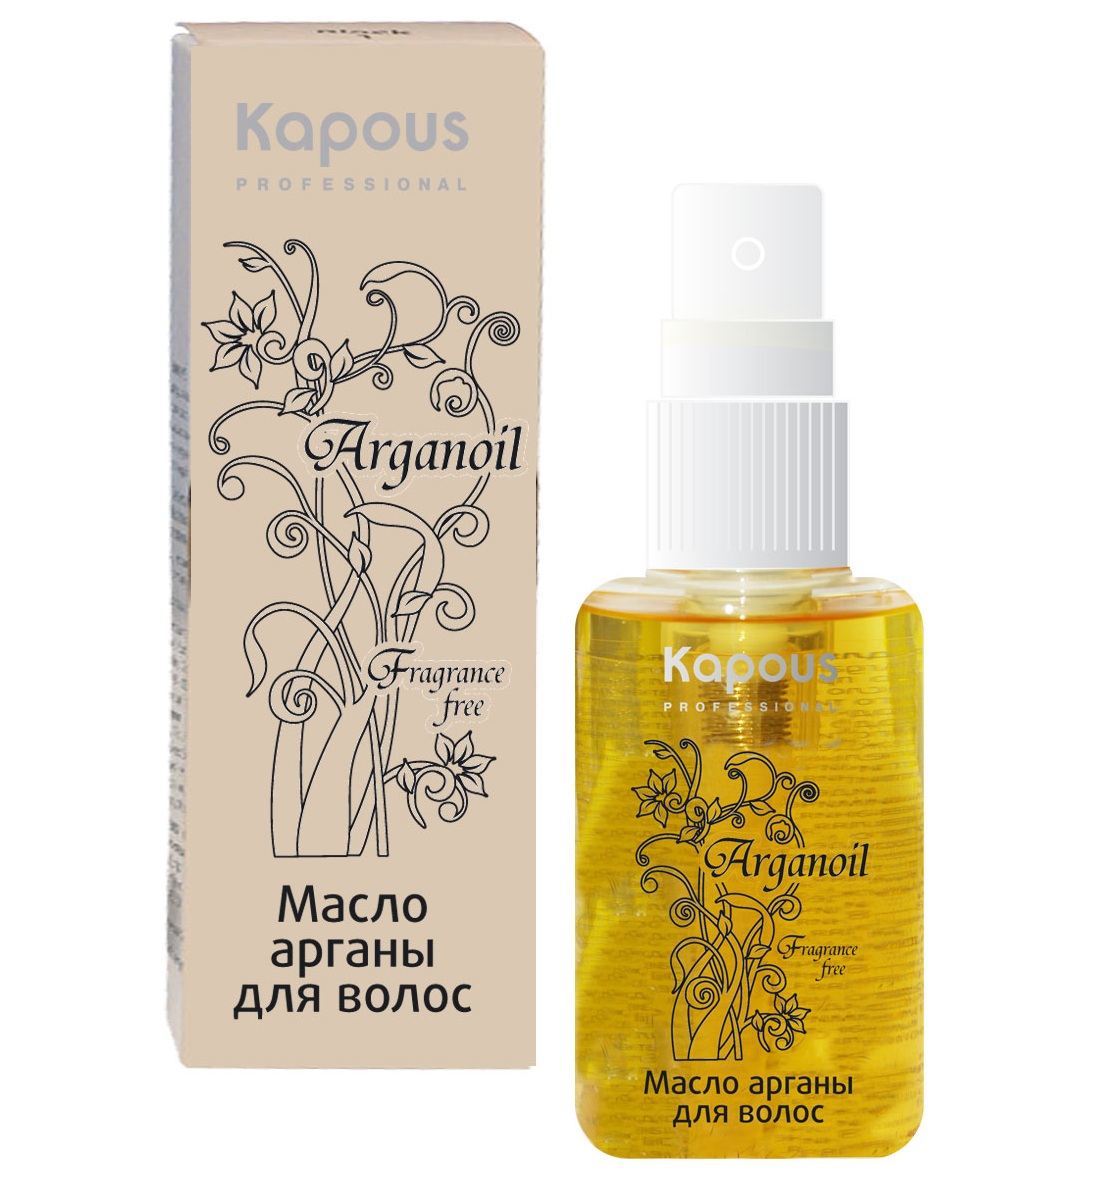 Kapous arganoil масло арганы для волос 75 мл*